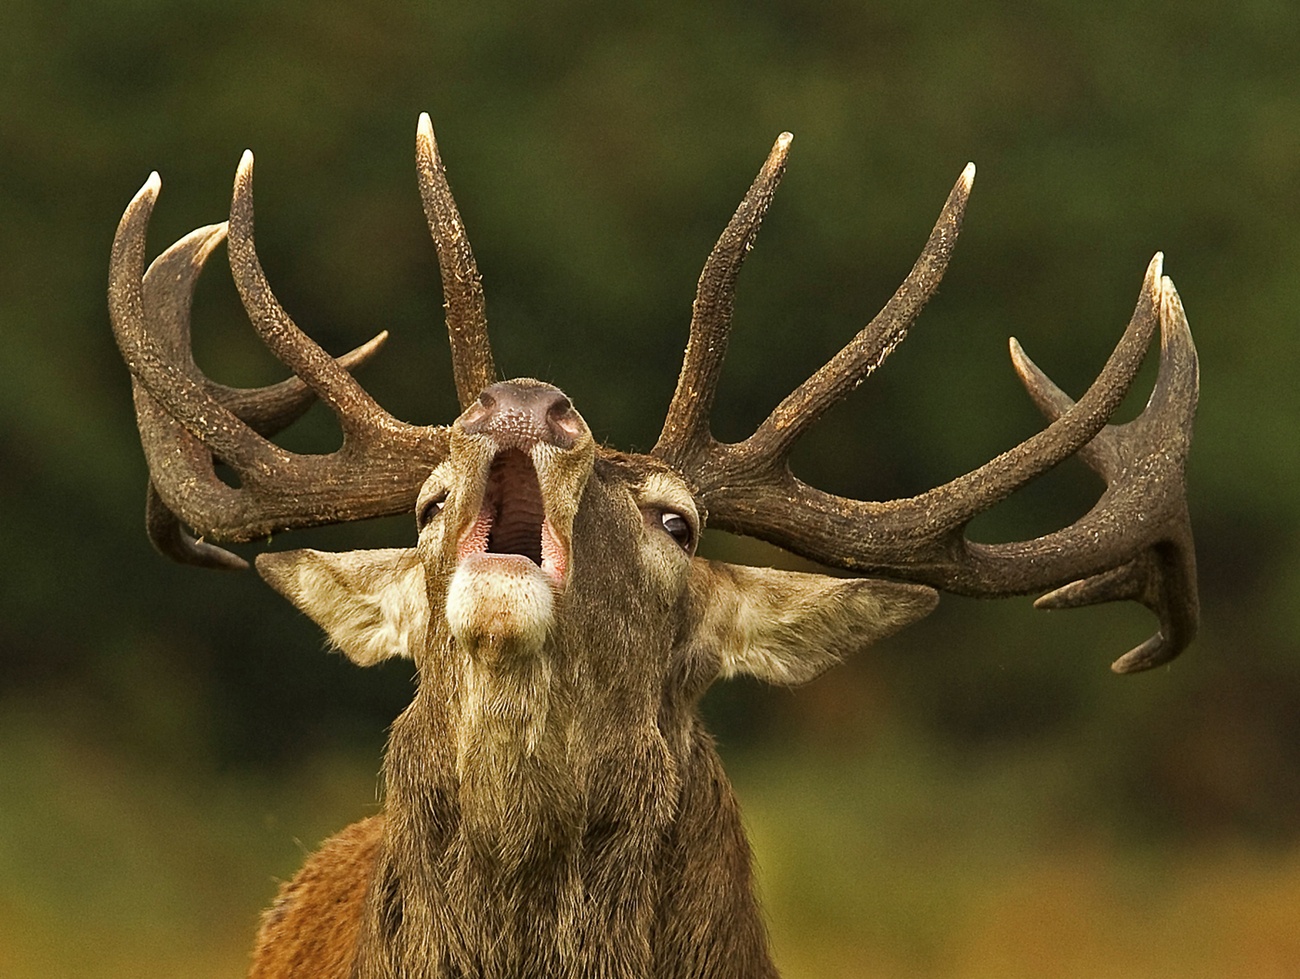 500 Animal Horns Photo Contest Winners